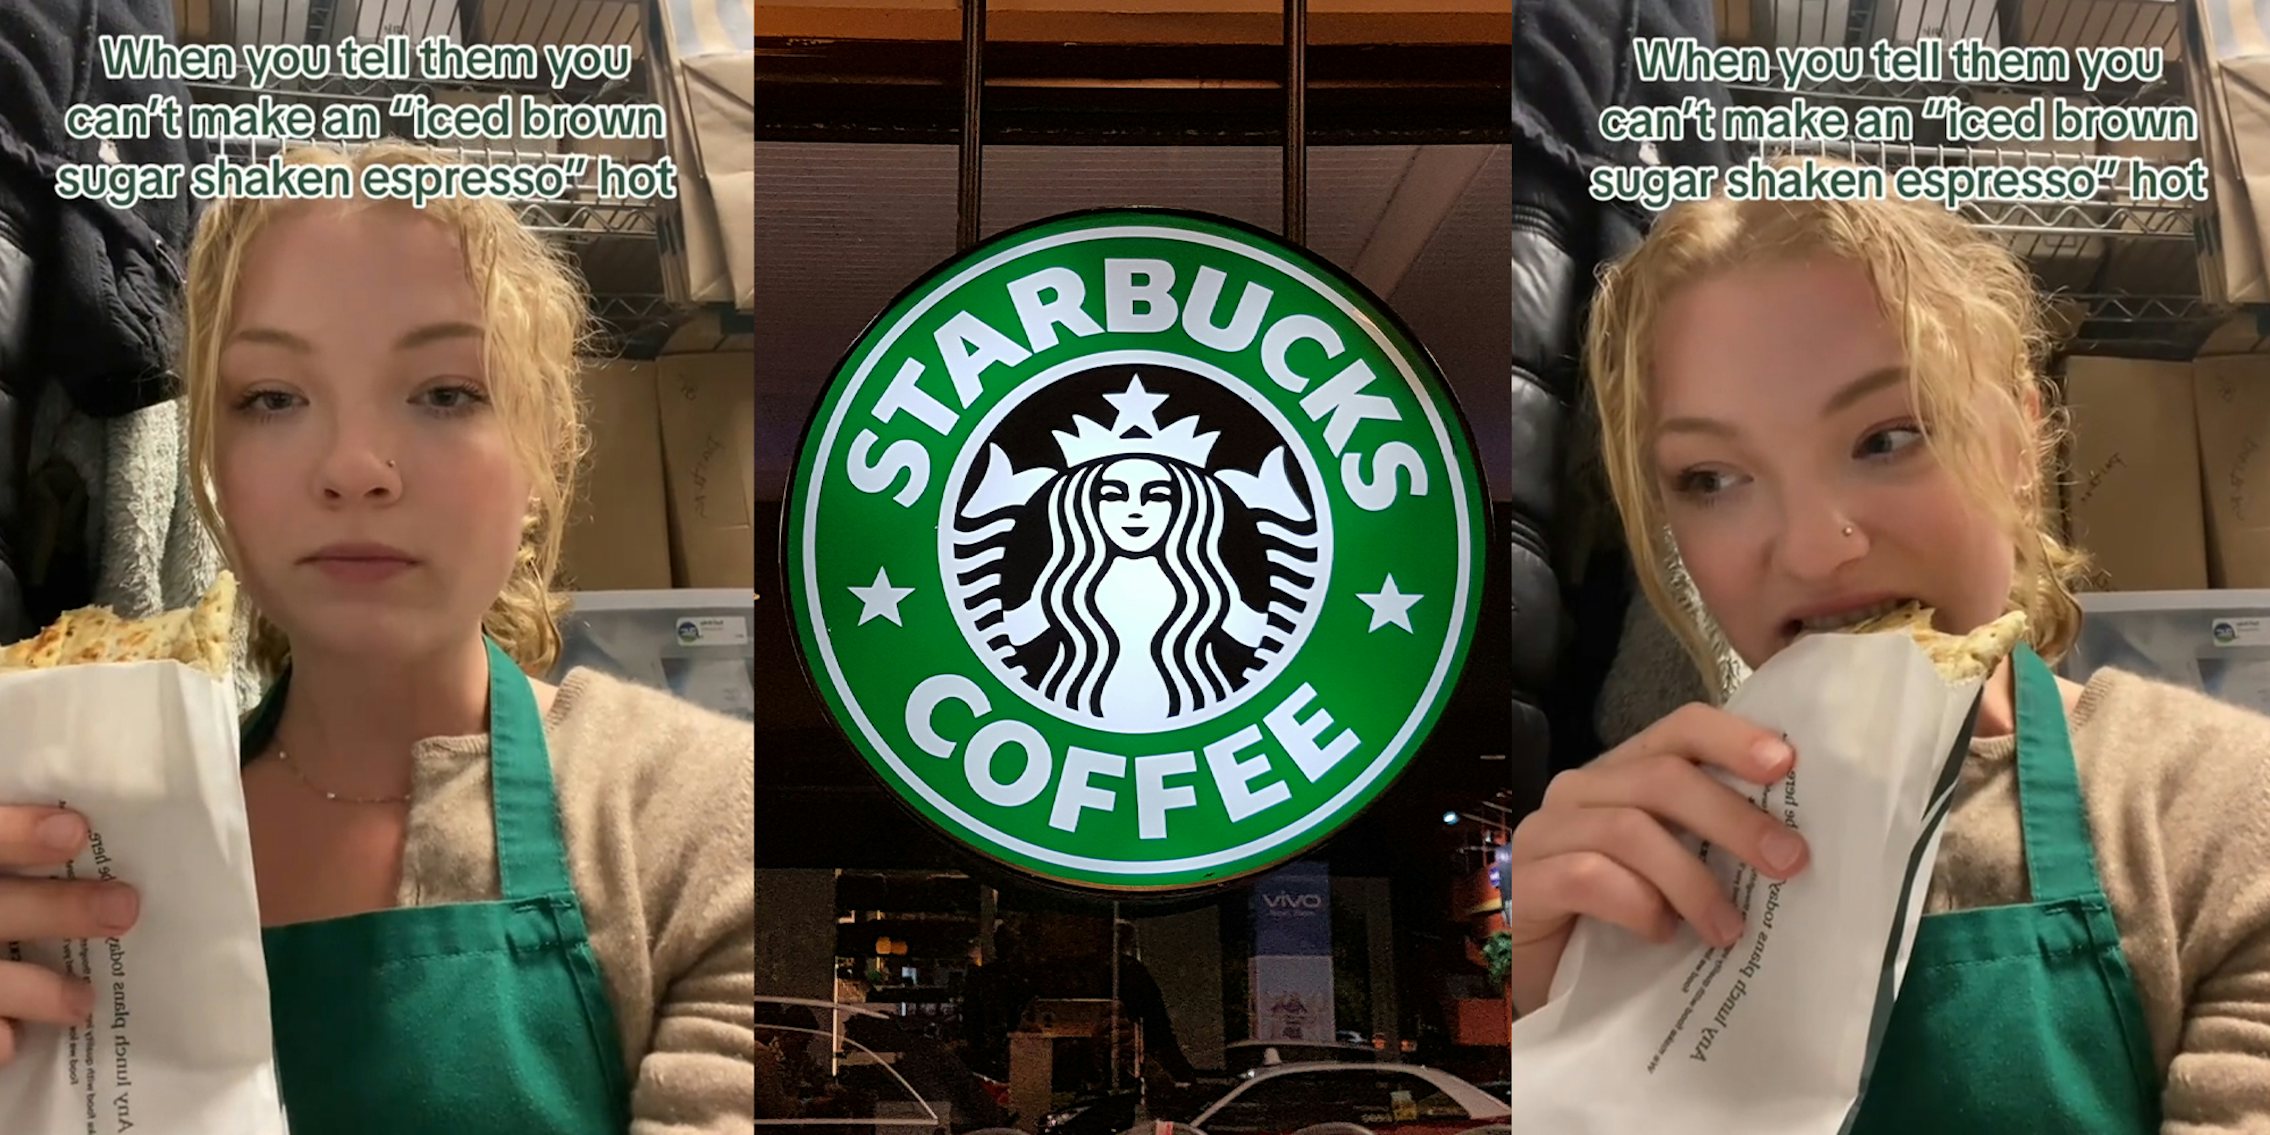 Starbucks worker says customer asked for ‘iced brown sugar shaken espresso’ hot